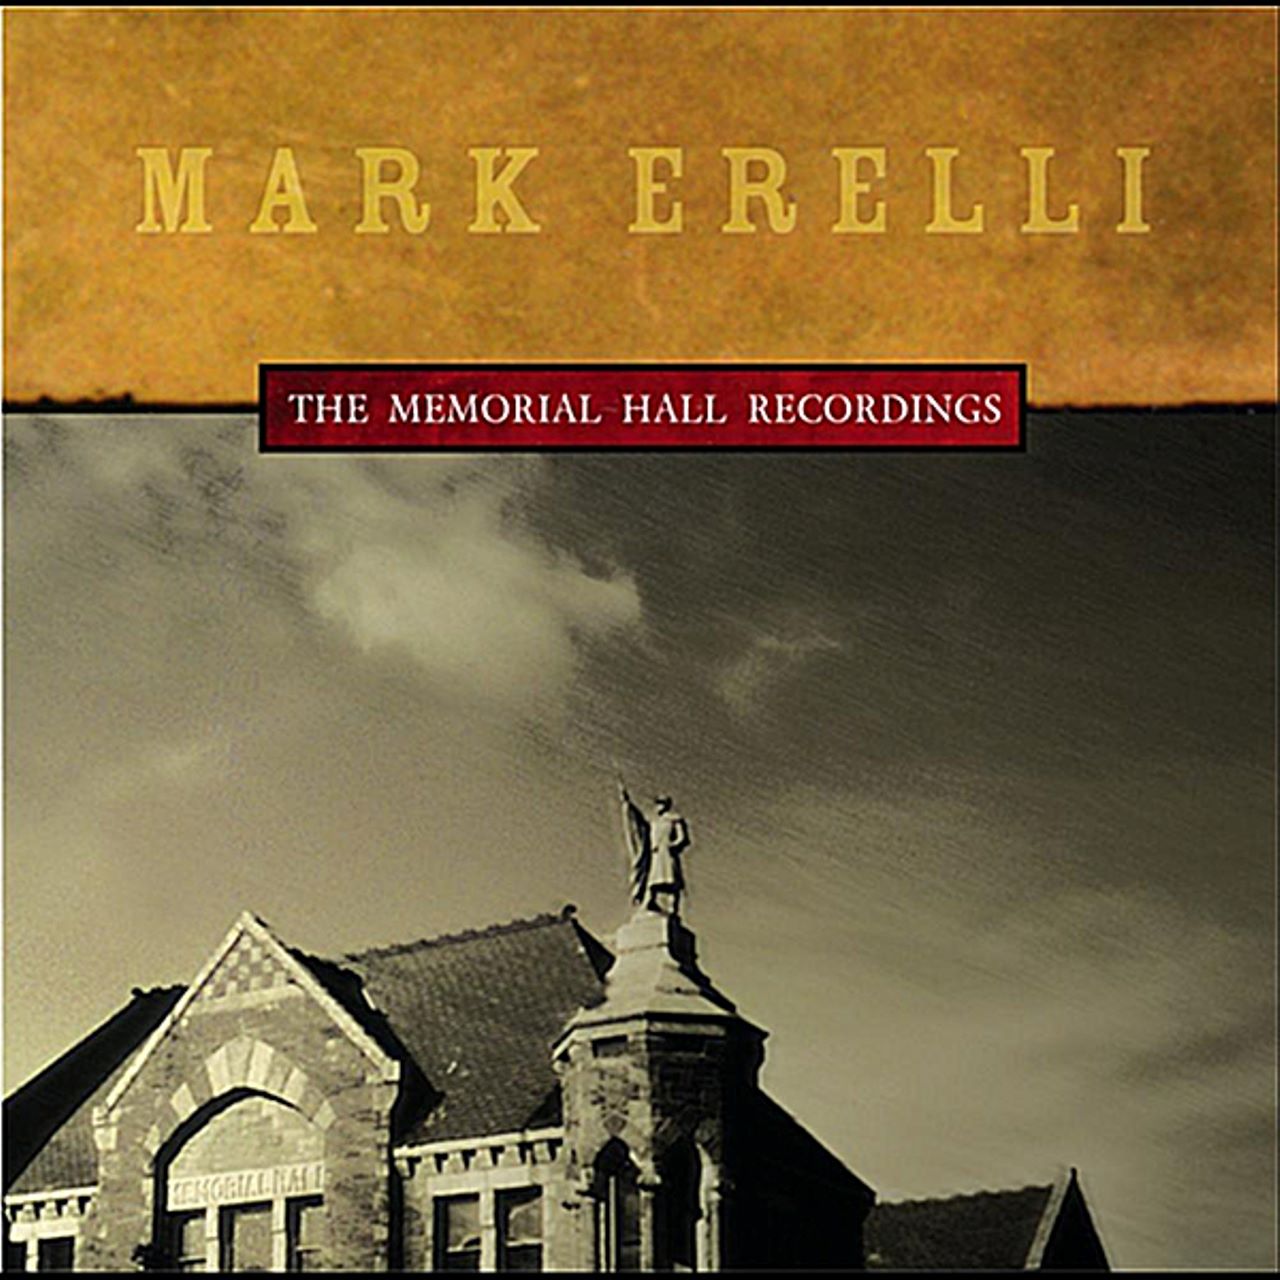 Mark Erelli - The Memorial Hall Recordings cover album